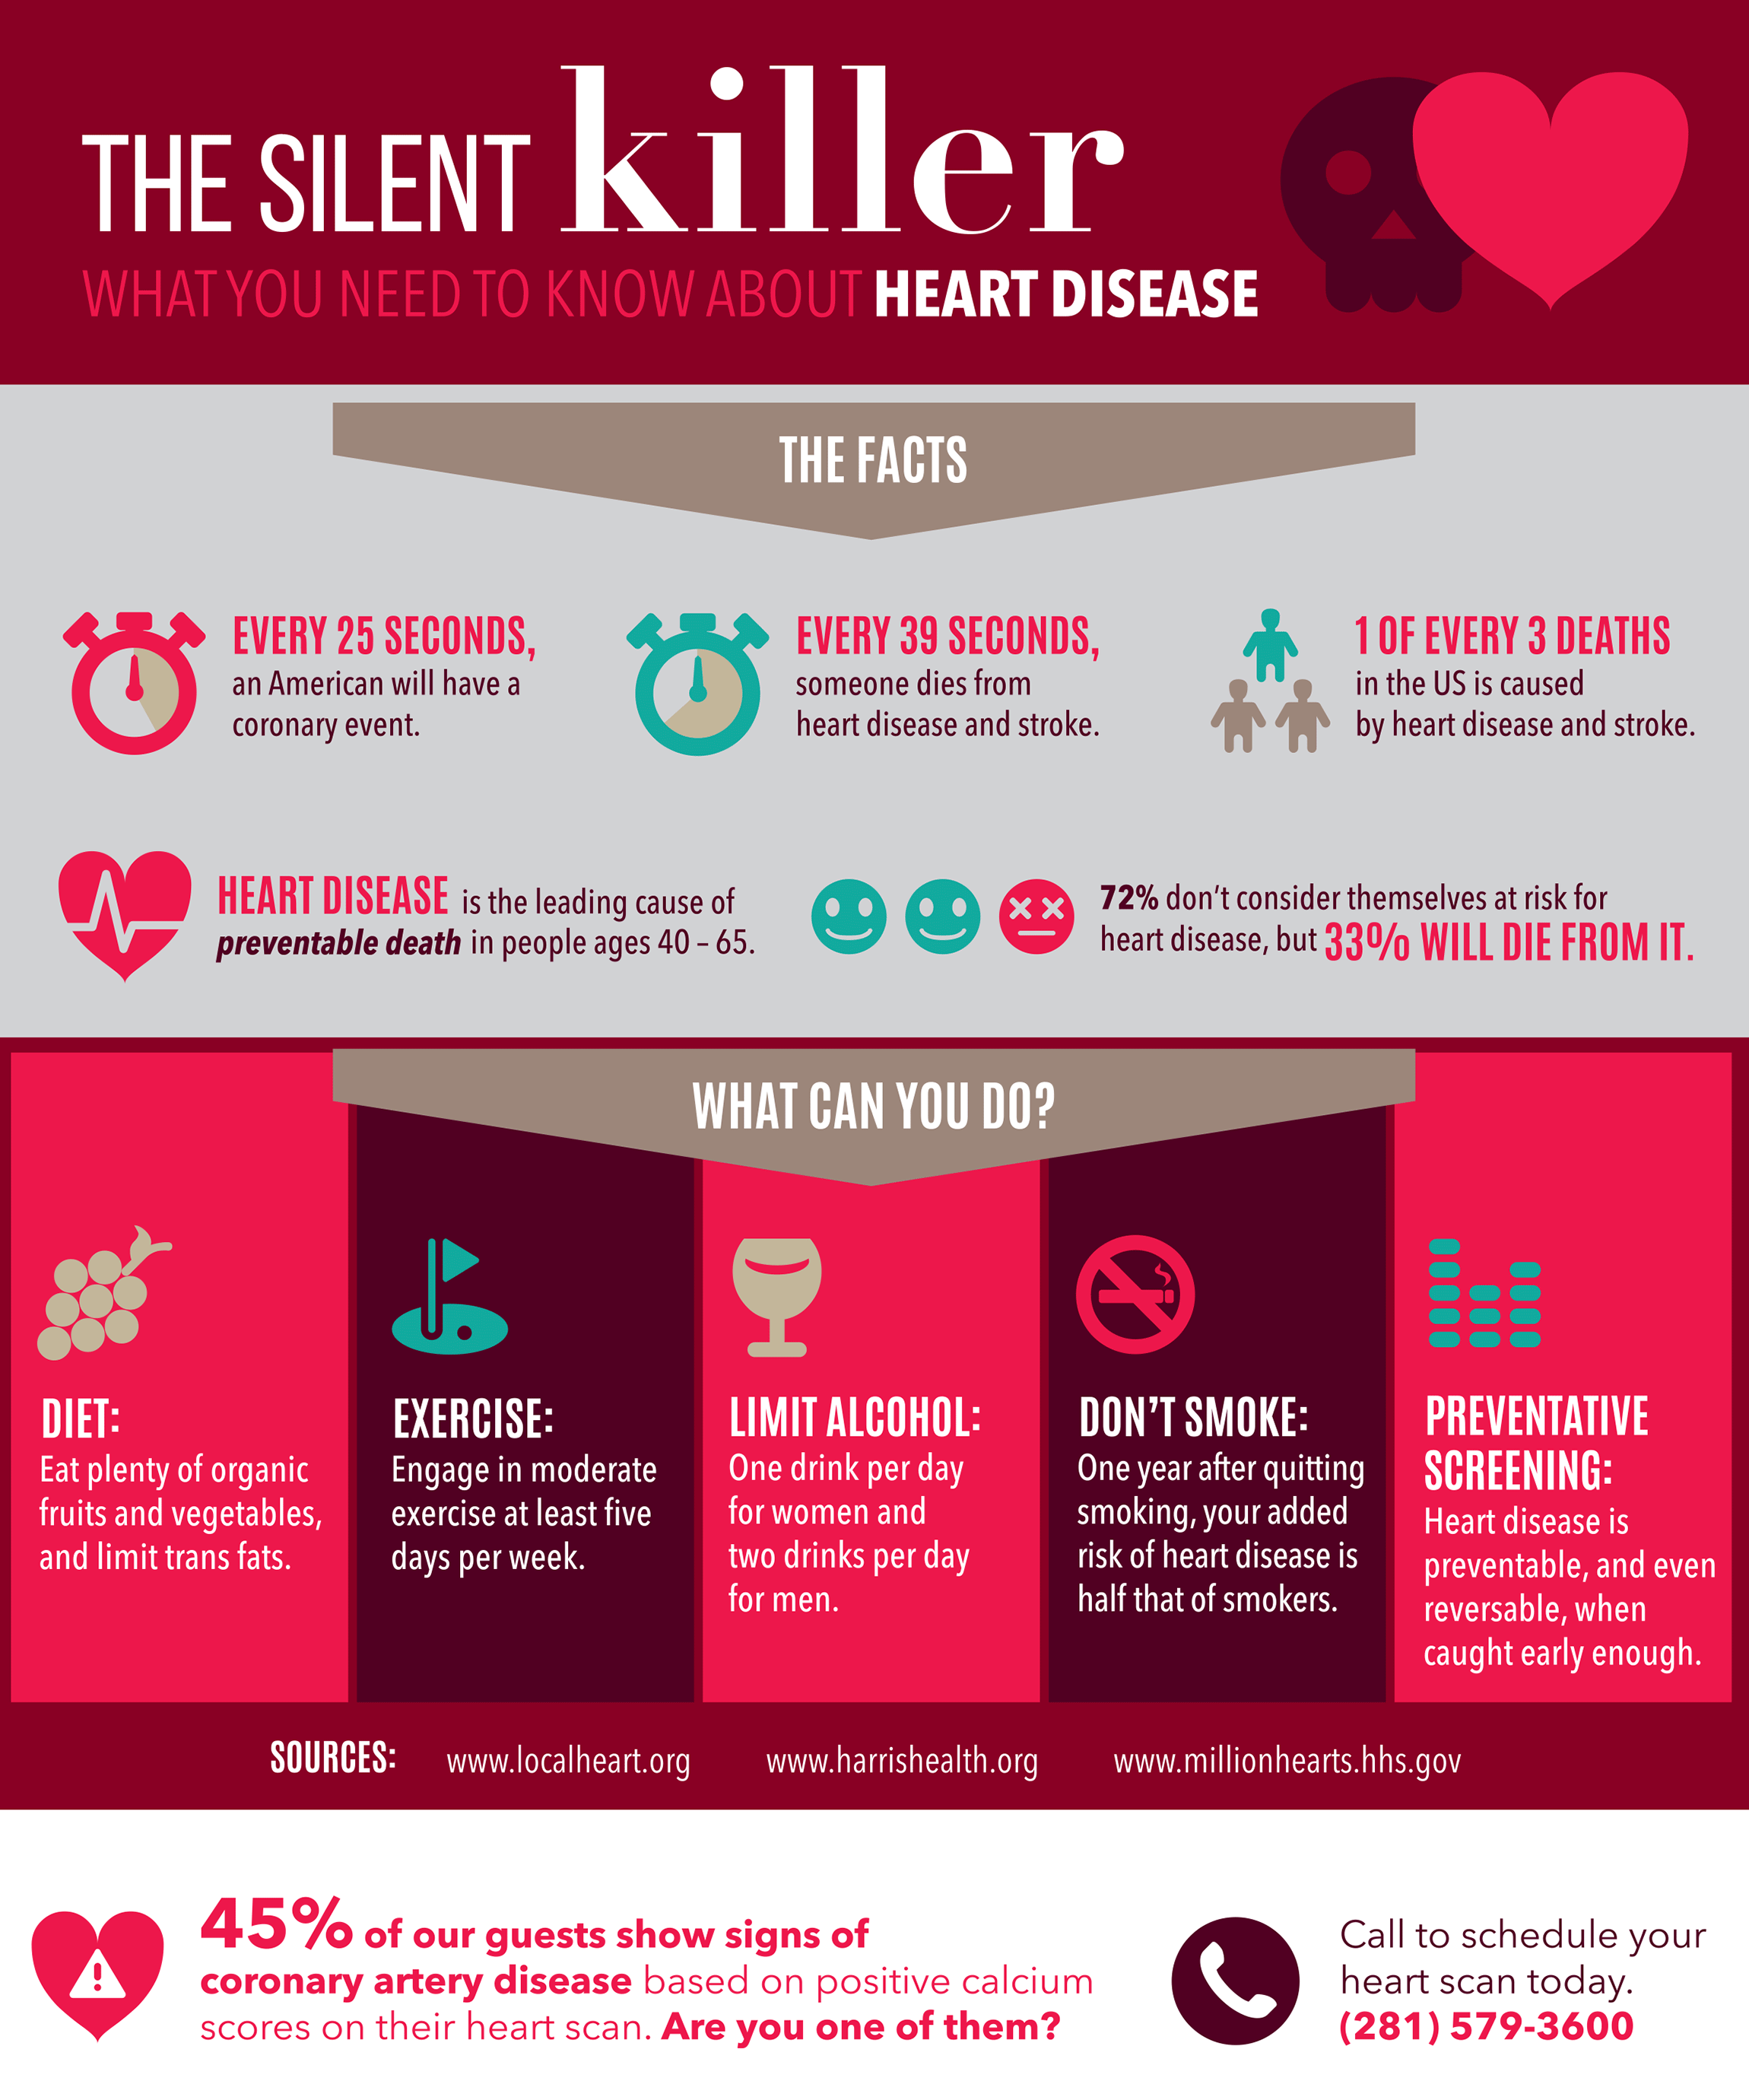 The Silent Killer: Heart Disease